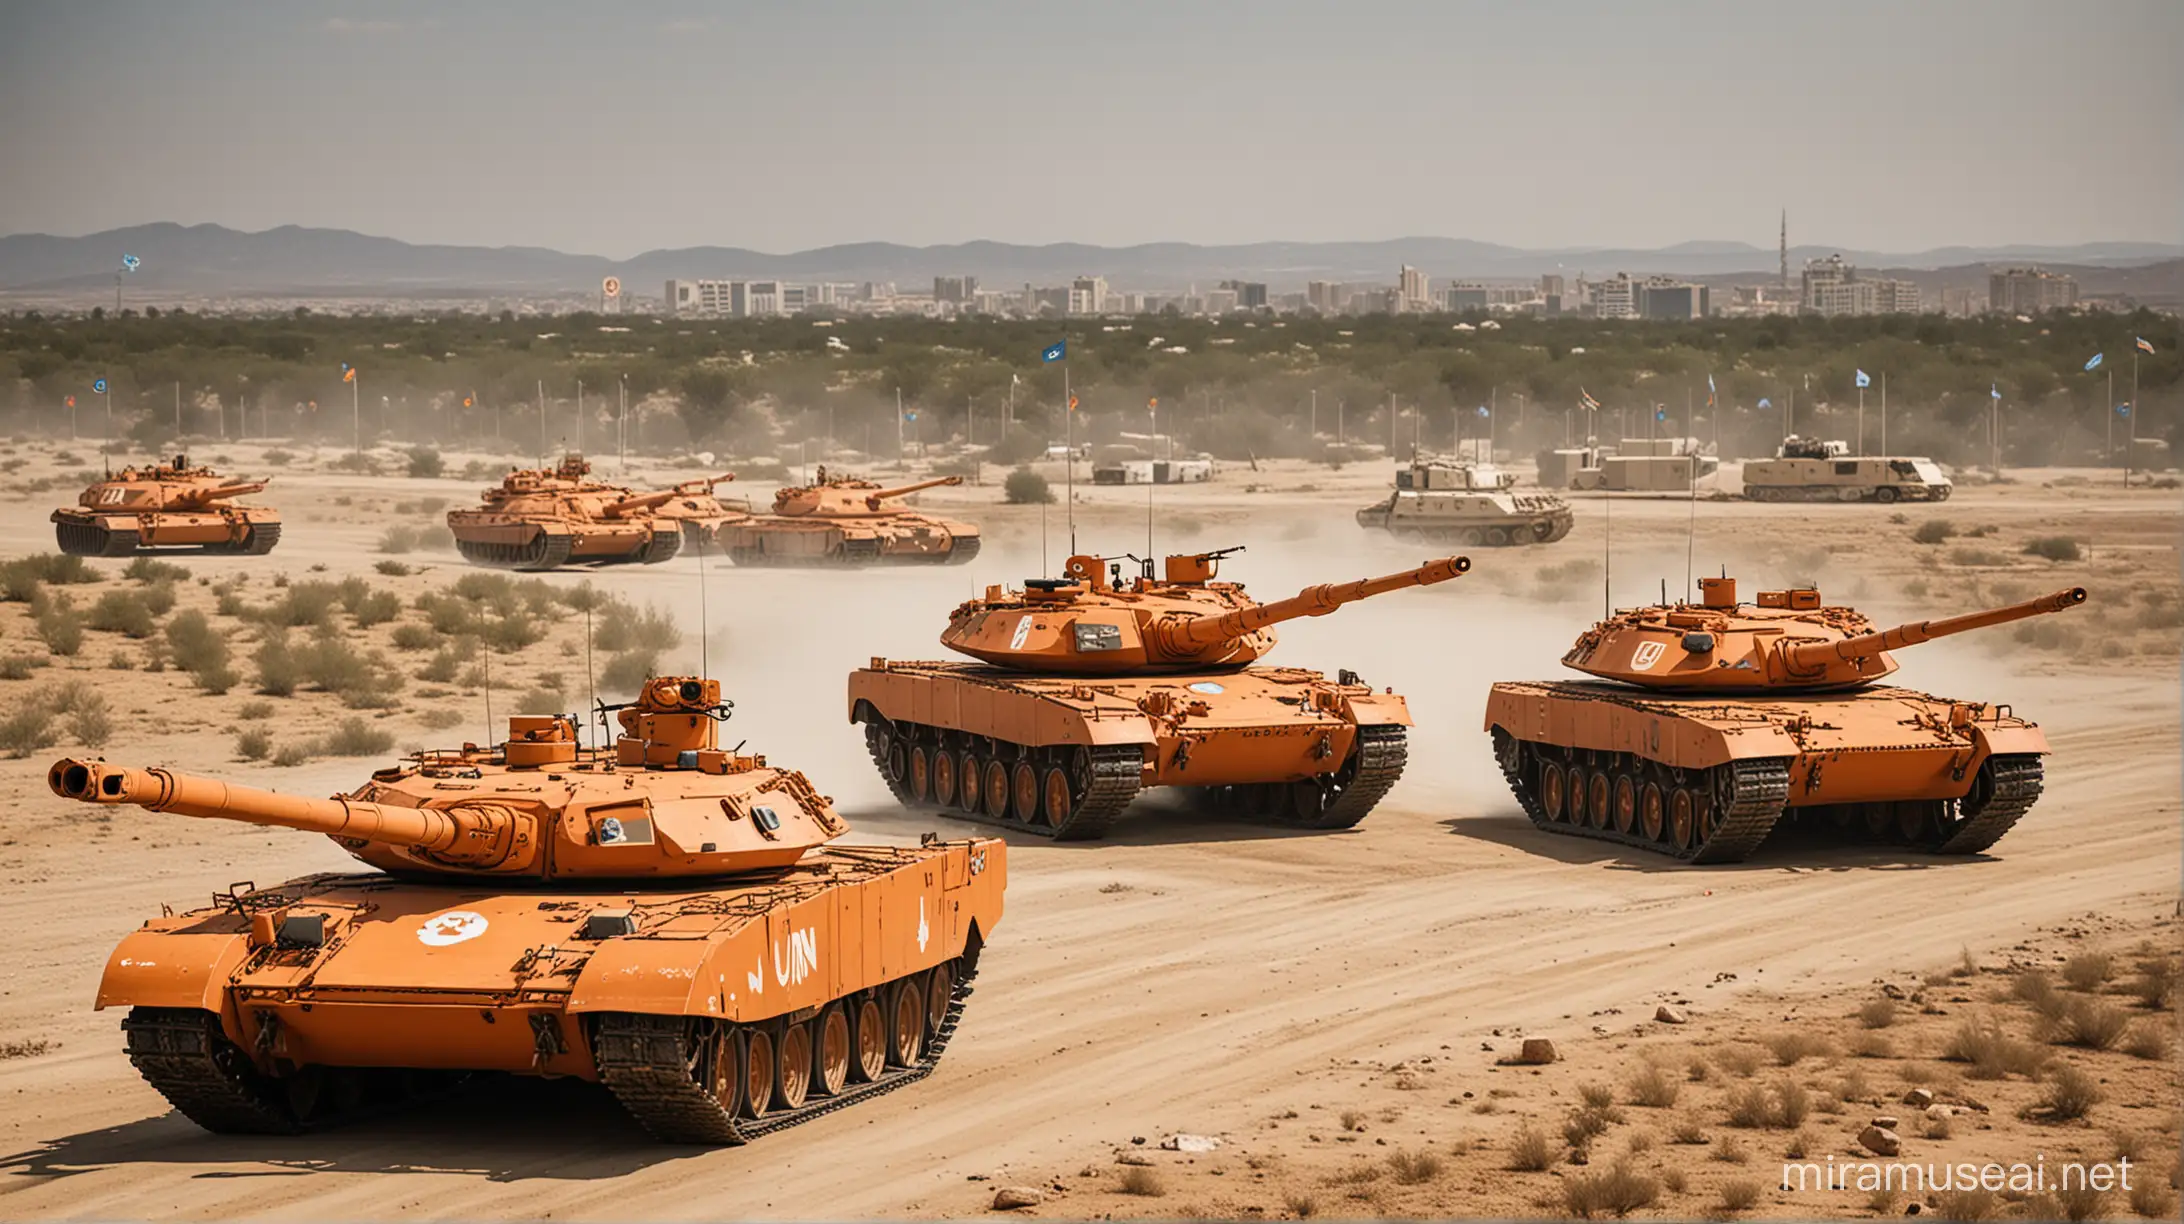 Orange military tanks With UN symbols
